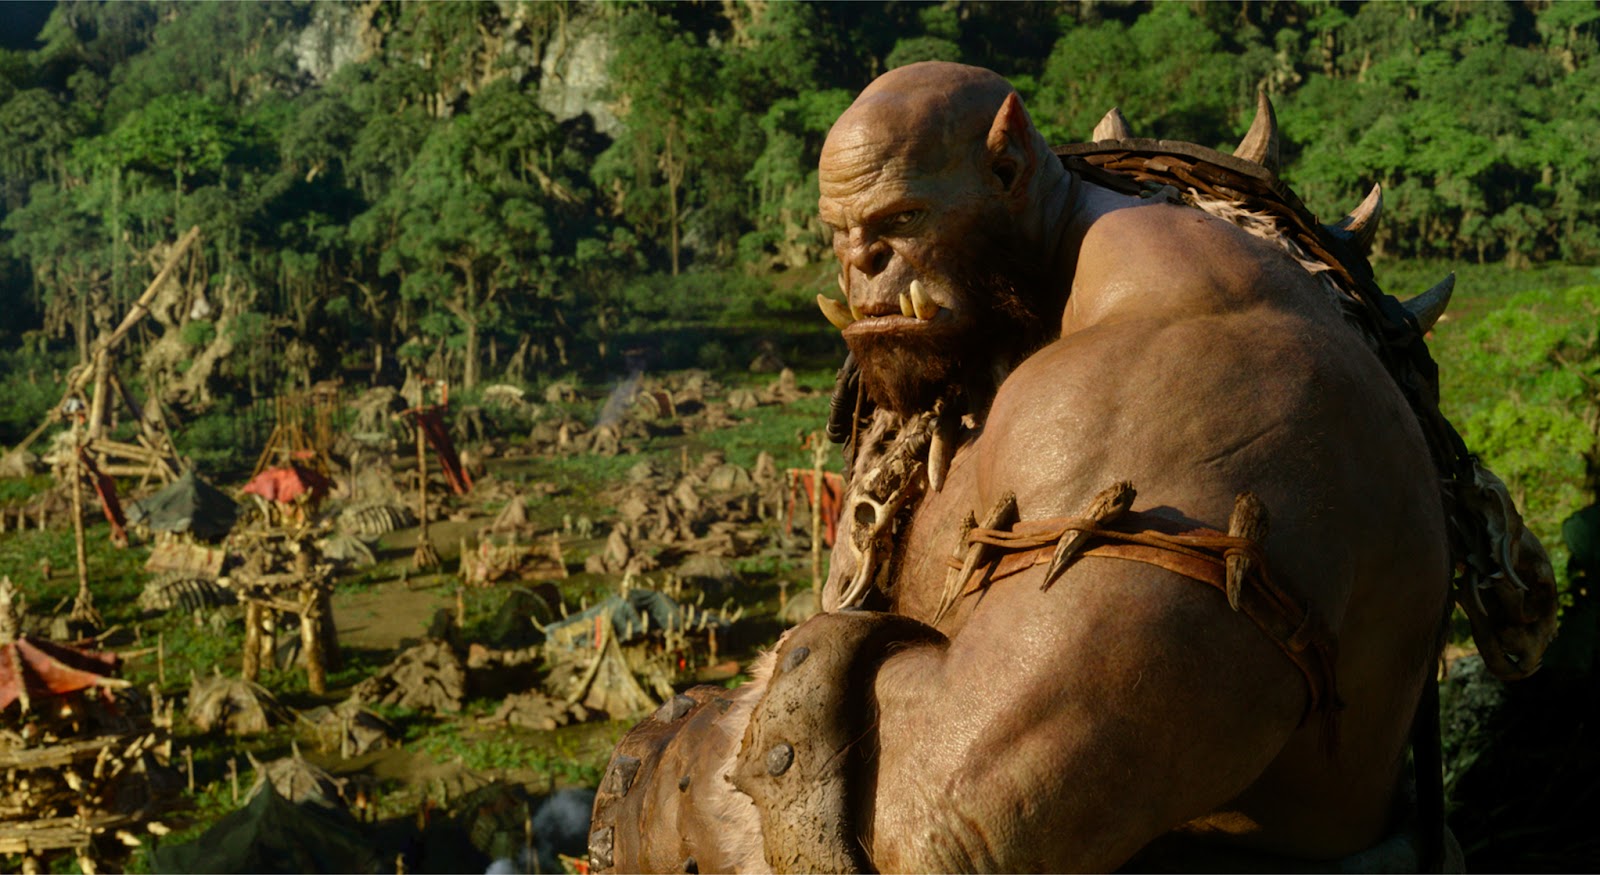 ｃｉａ こちら映画中央情報局です Warcraft ダンカン ジョーンズ監督が人気ゲームを映画 化した壮大なアクション ファンタジー ウォークラフト が ヒューマンとオークの異なる種族の初遭遇と共闘の展開を披露した予告編を初公開